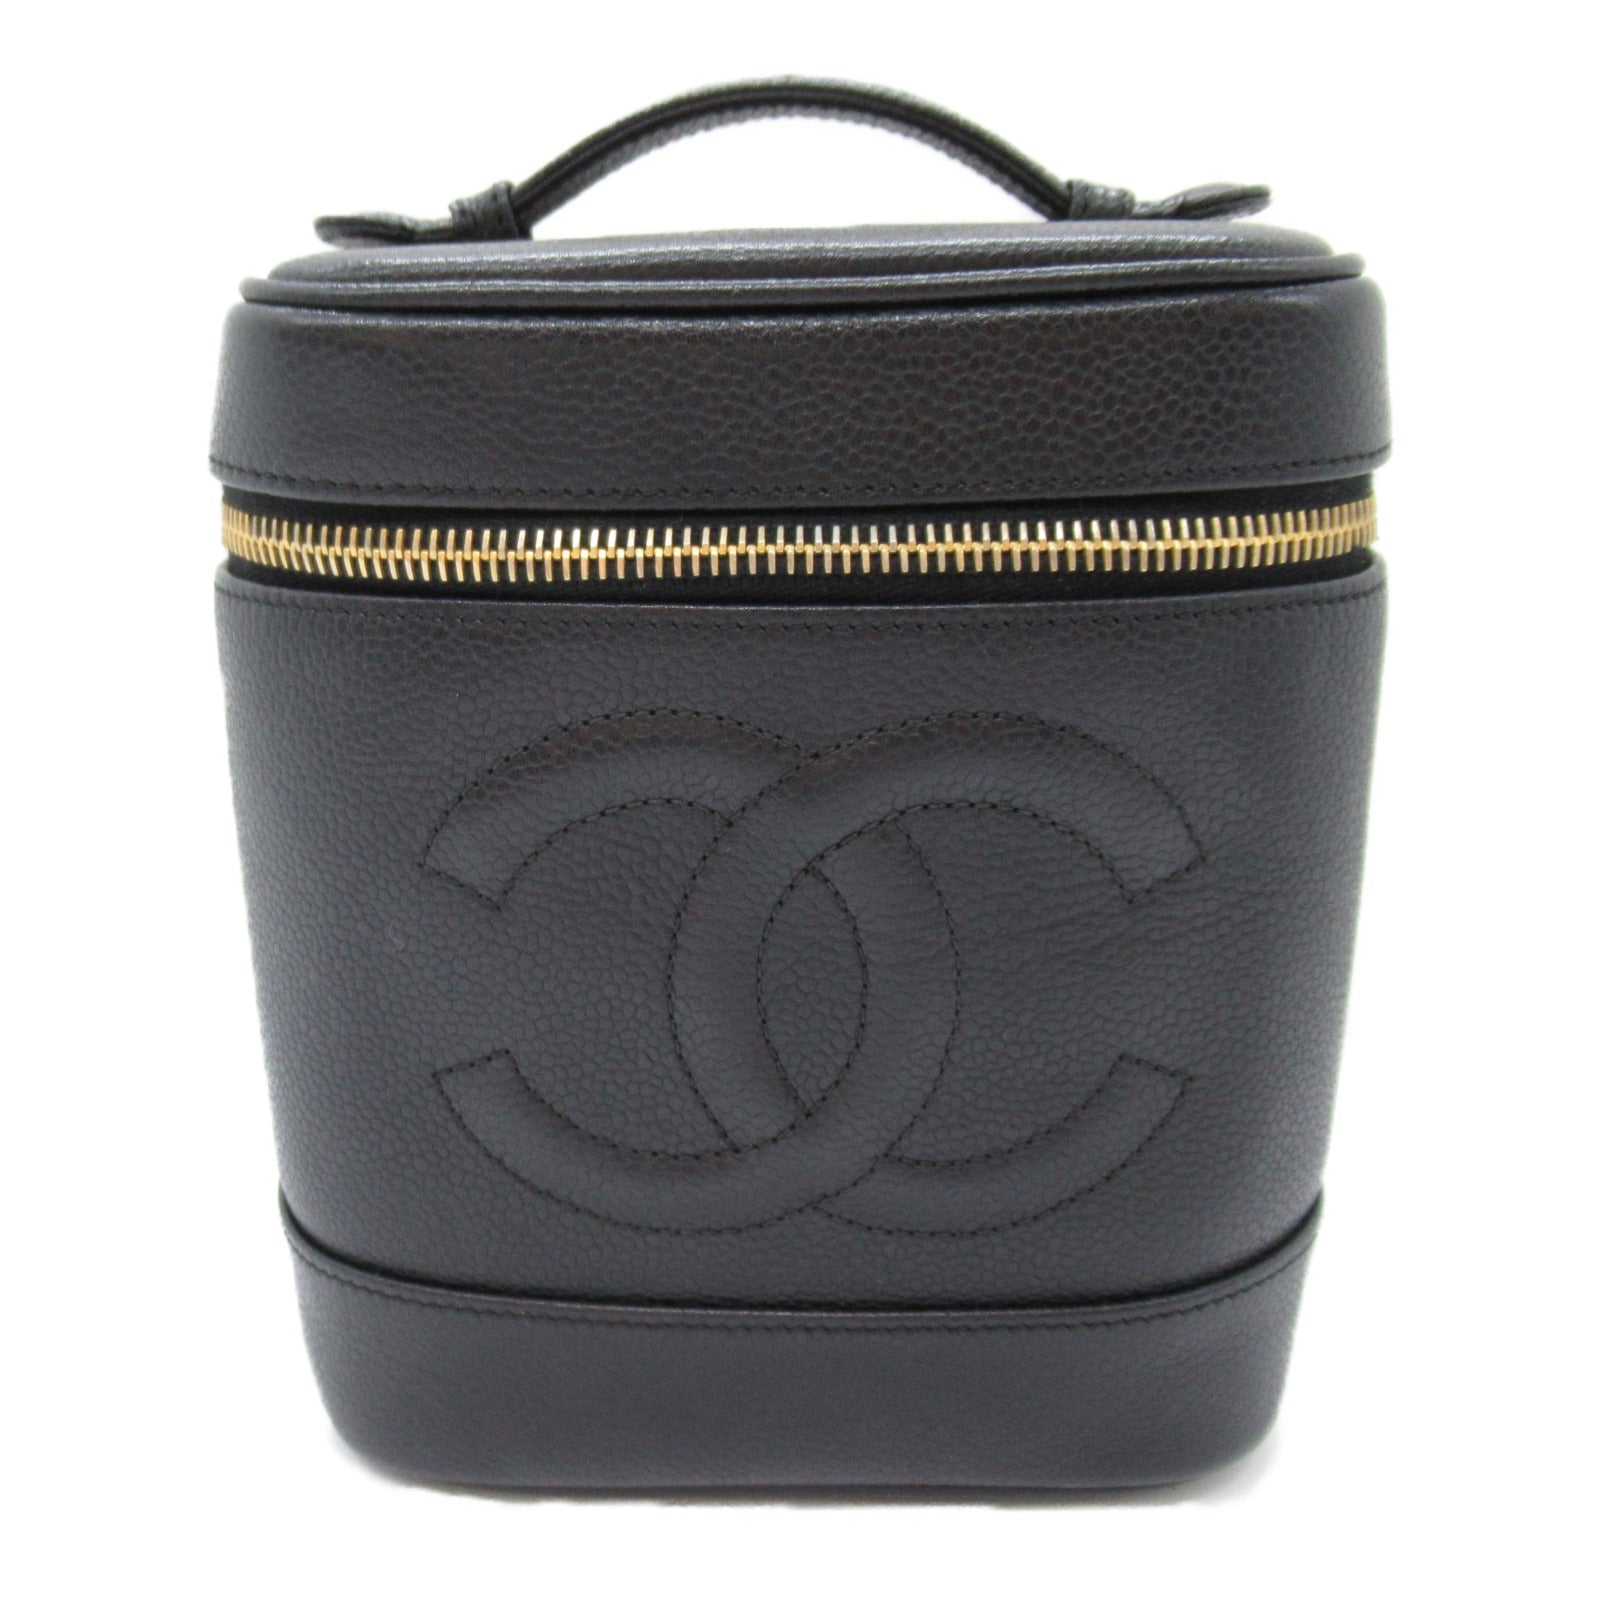 Chanel Laminated Vanity Bag Cabia S  Black Box